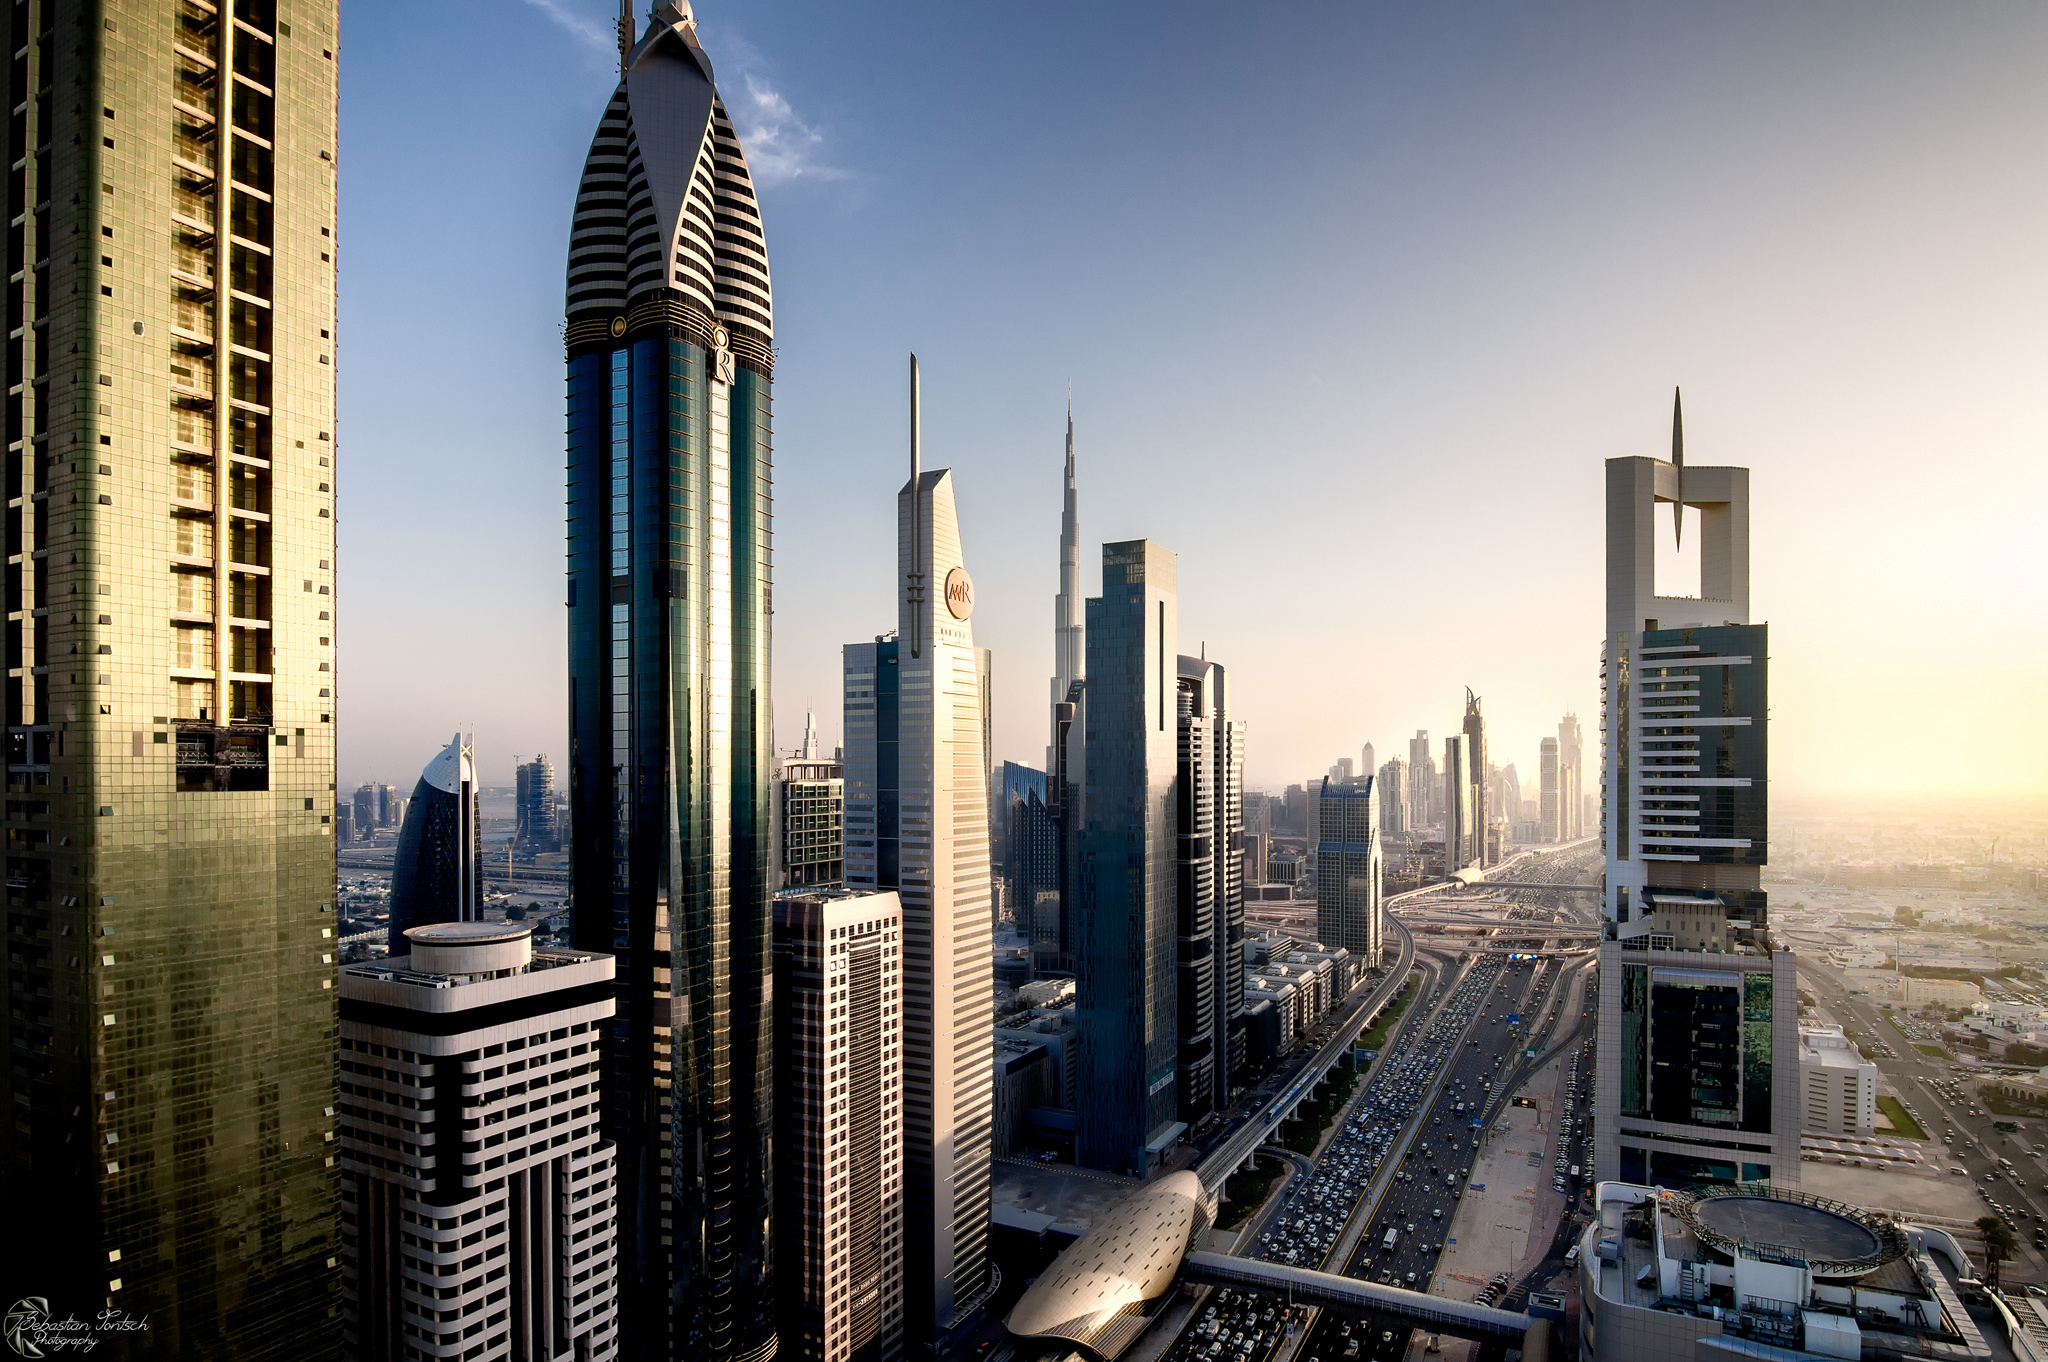 monorail, rose tower, dubai, megapolis, skyscraper, traffic, cityscape, man made, sheikh zayed avenue, united arab emirates, cities